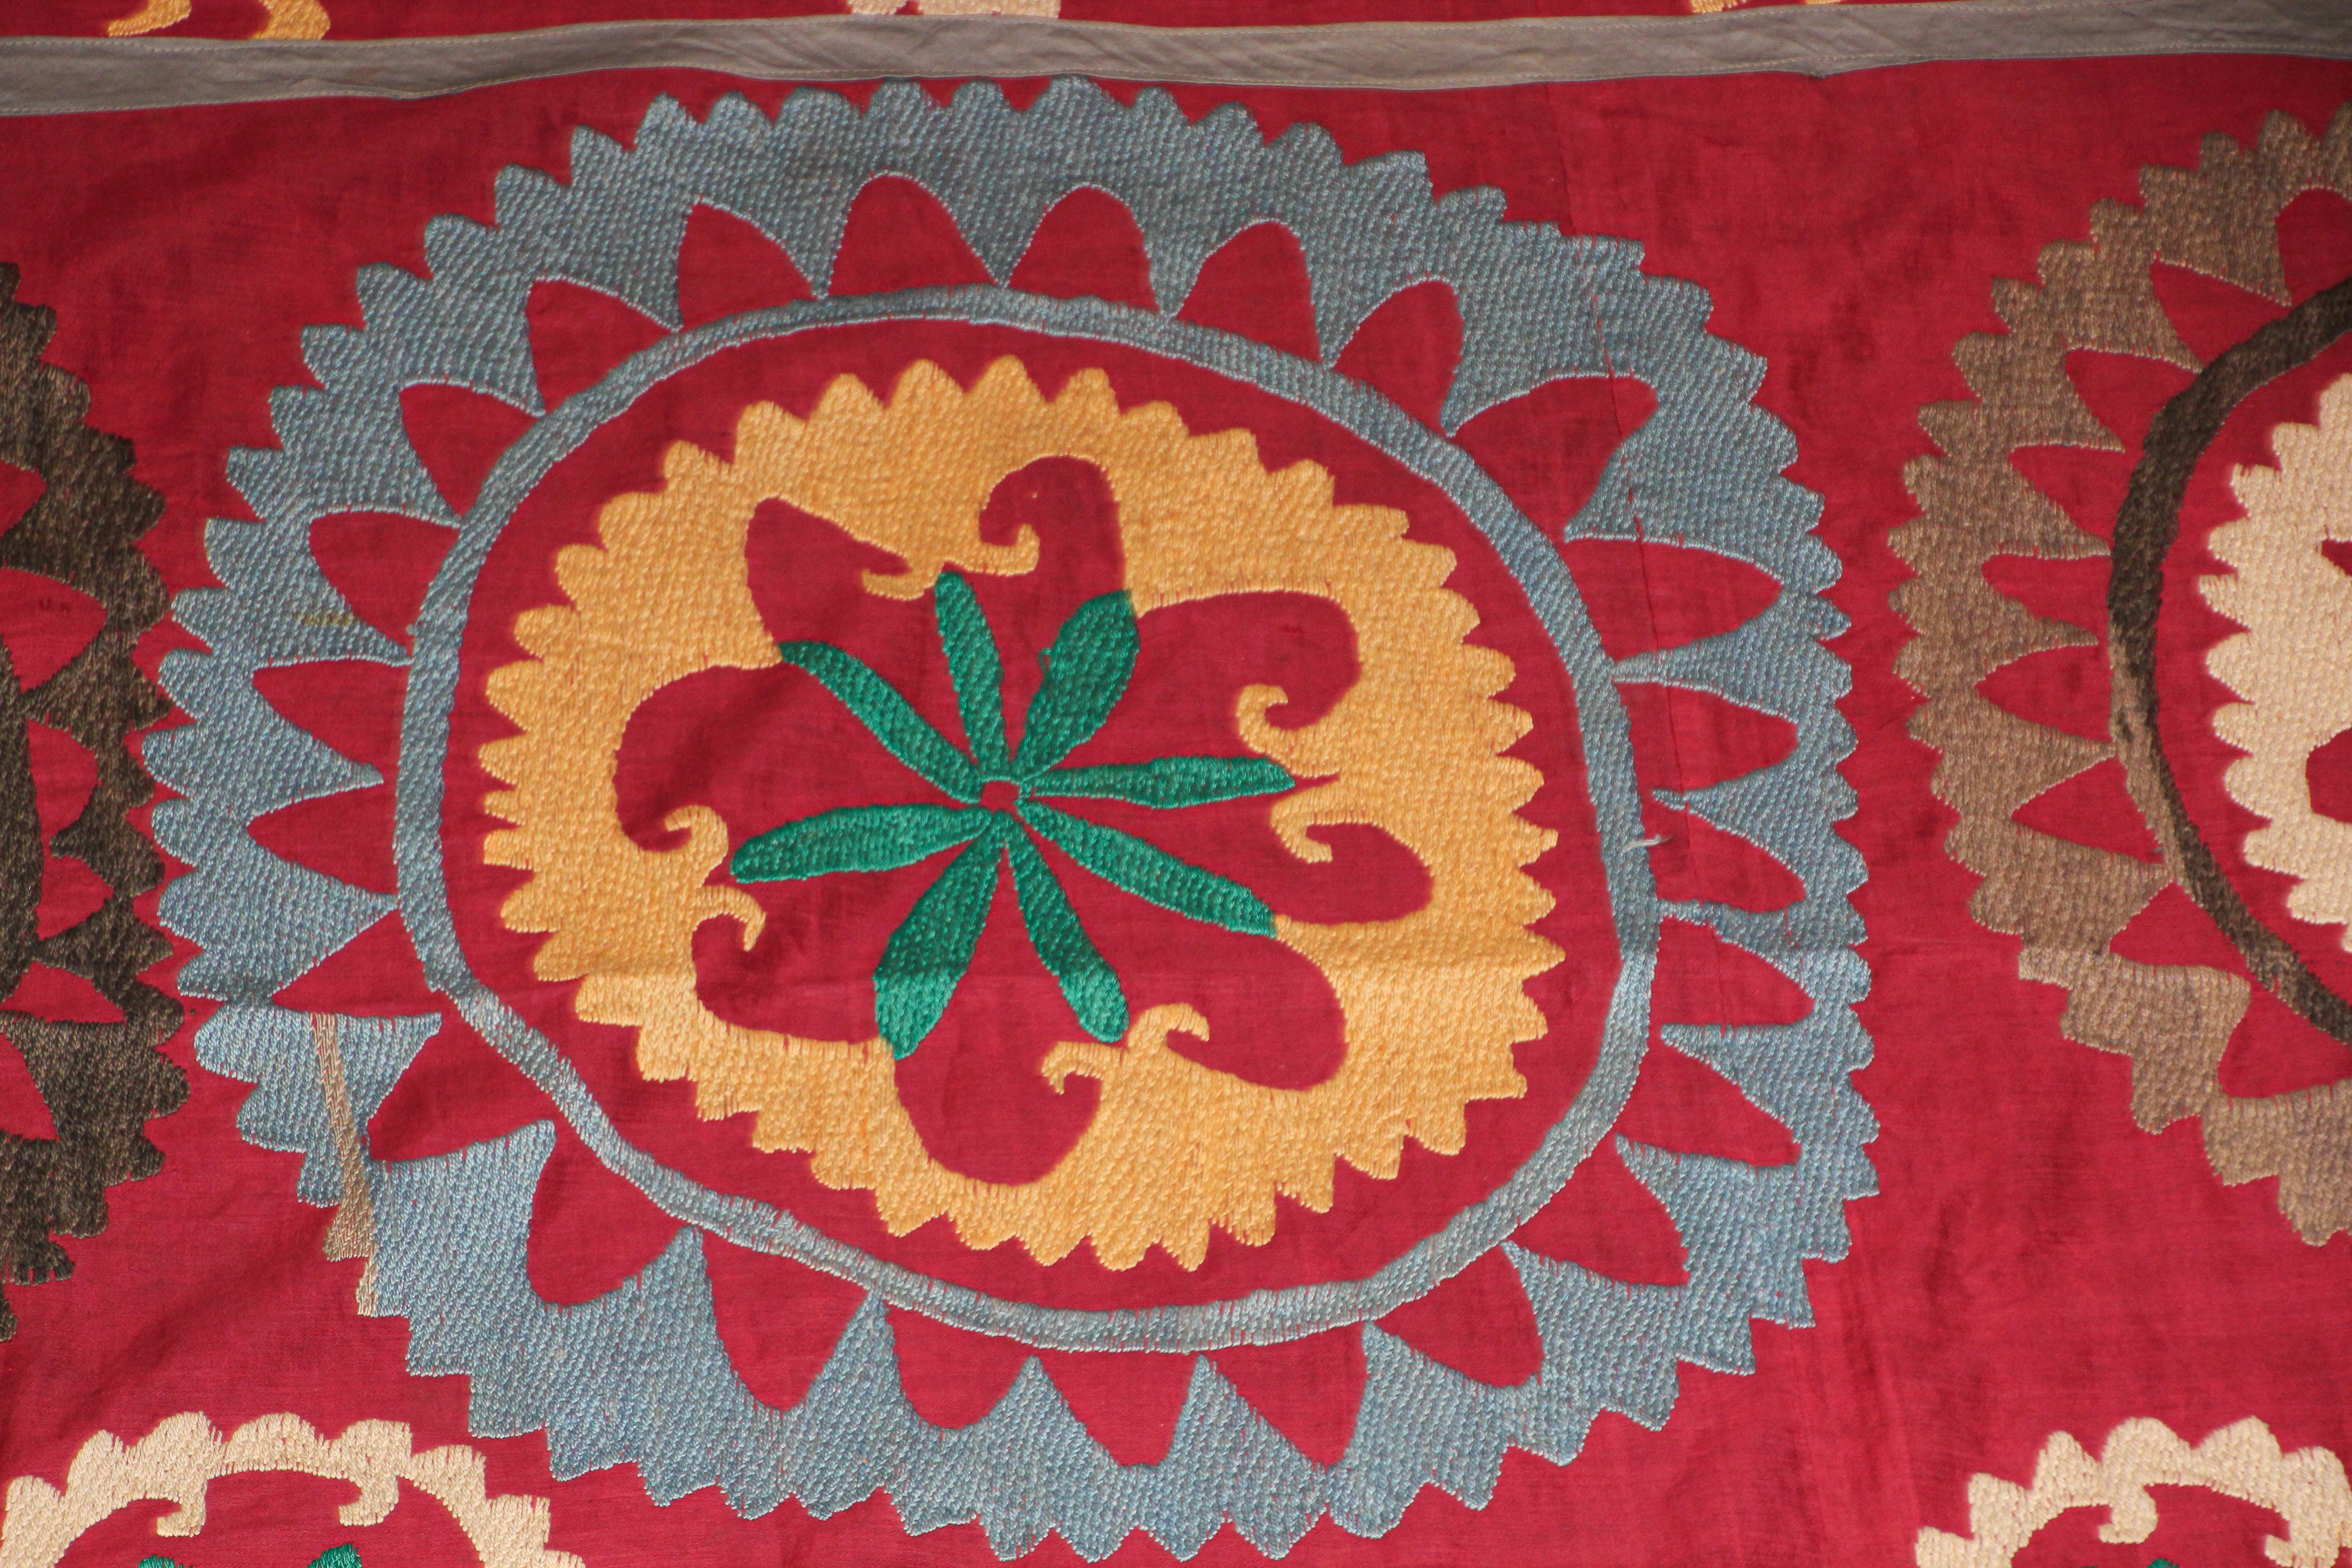 20th Century Vintage Uzbek Suzani Needlework Textile Blanket or Tapestry